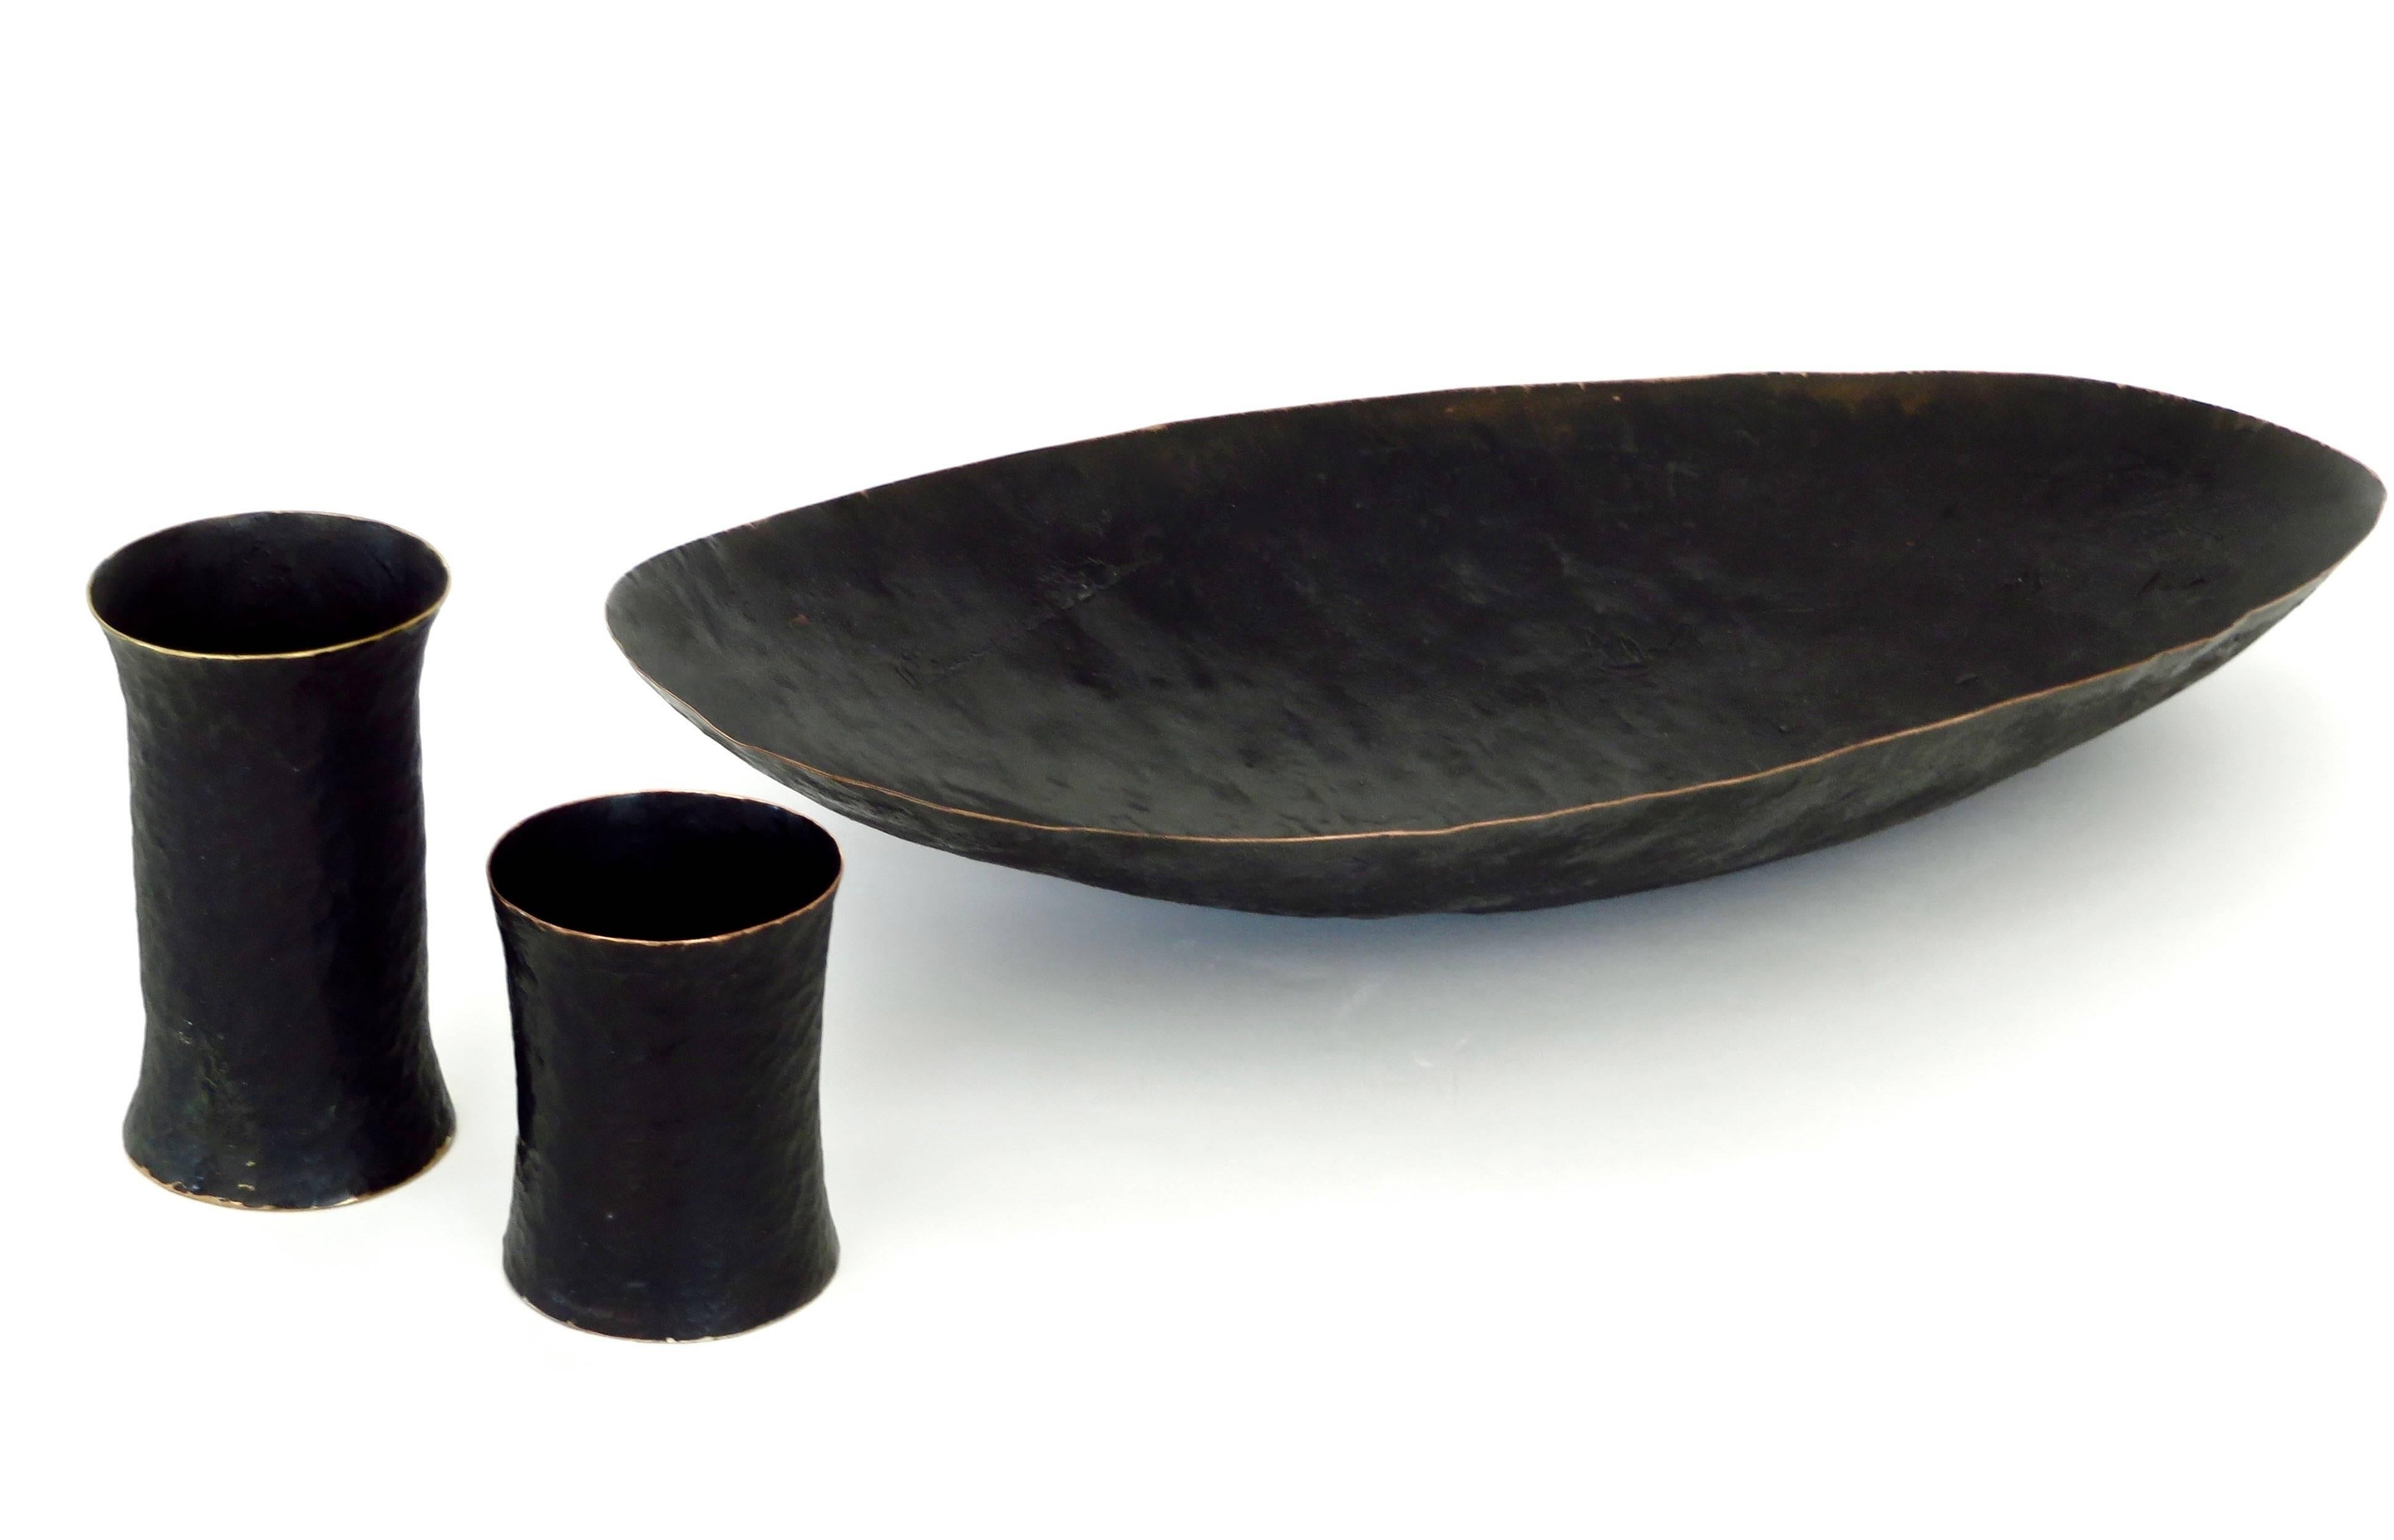 Contemporary Hvnter Gvtherer Laura Prieto-Velasco Poros Sculptural Bowl and Chalices